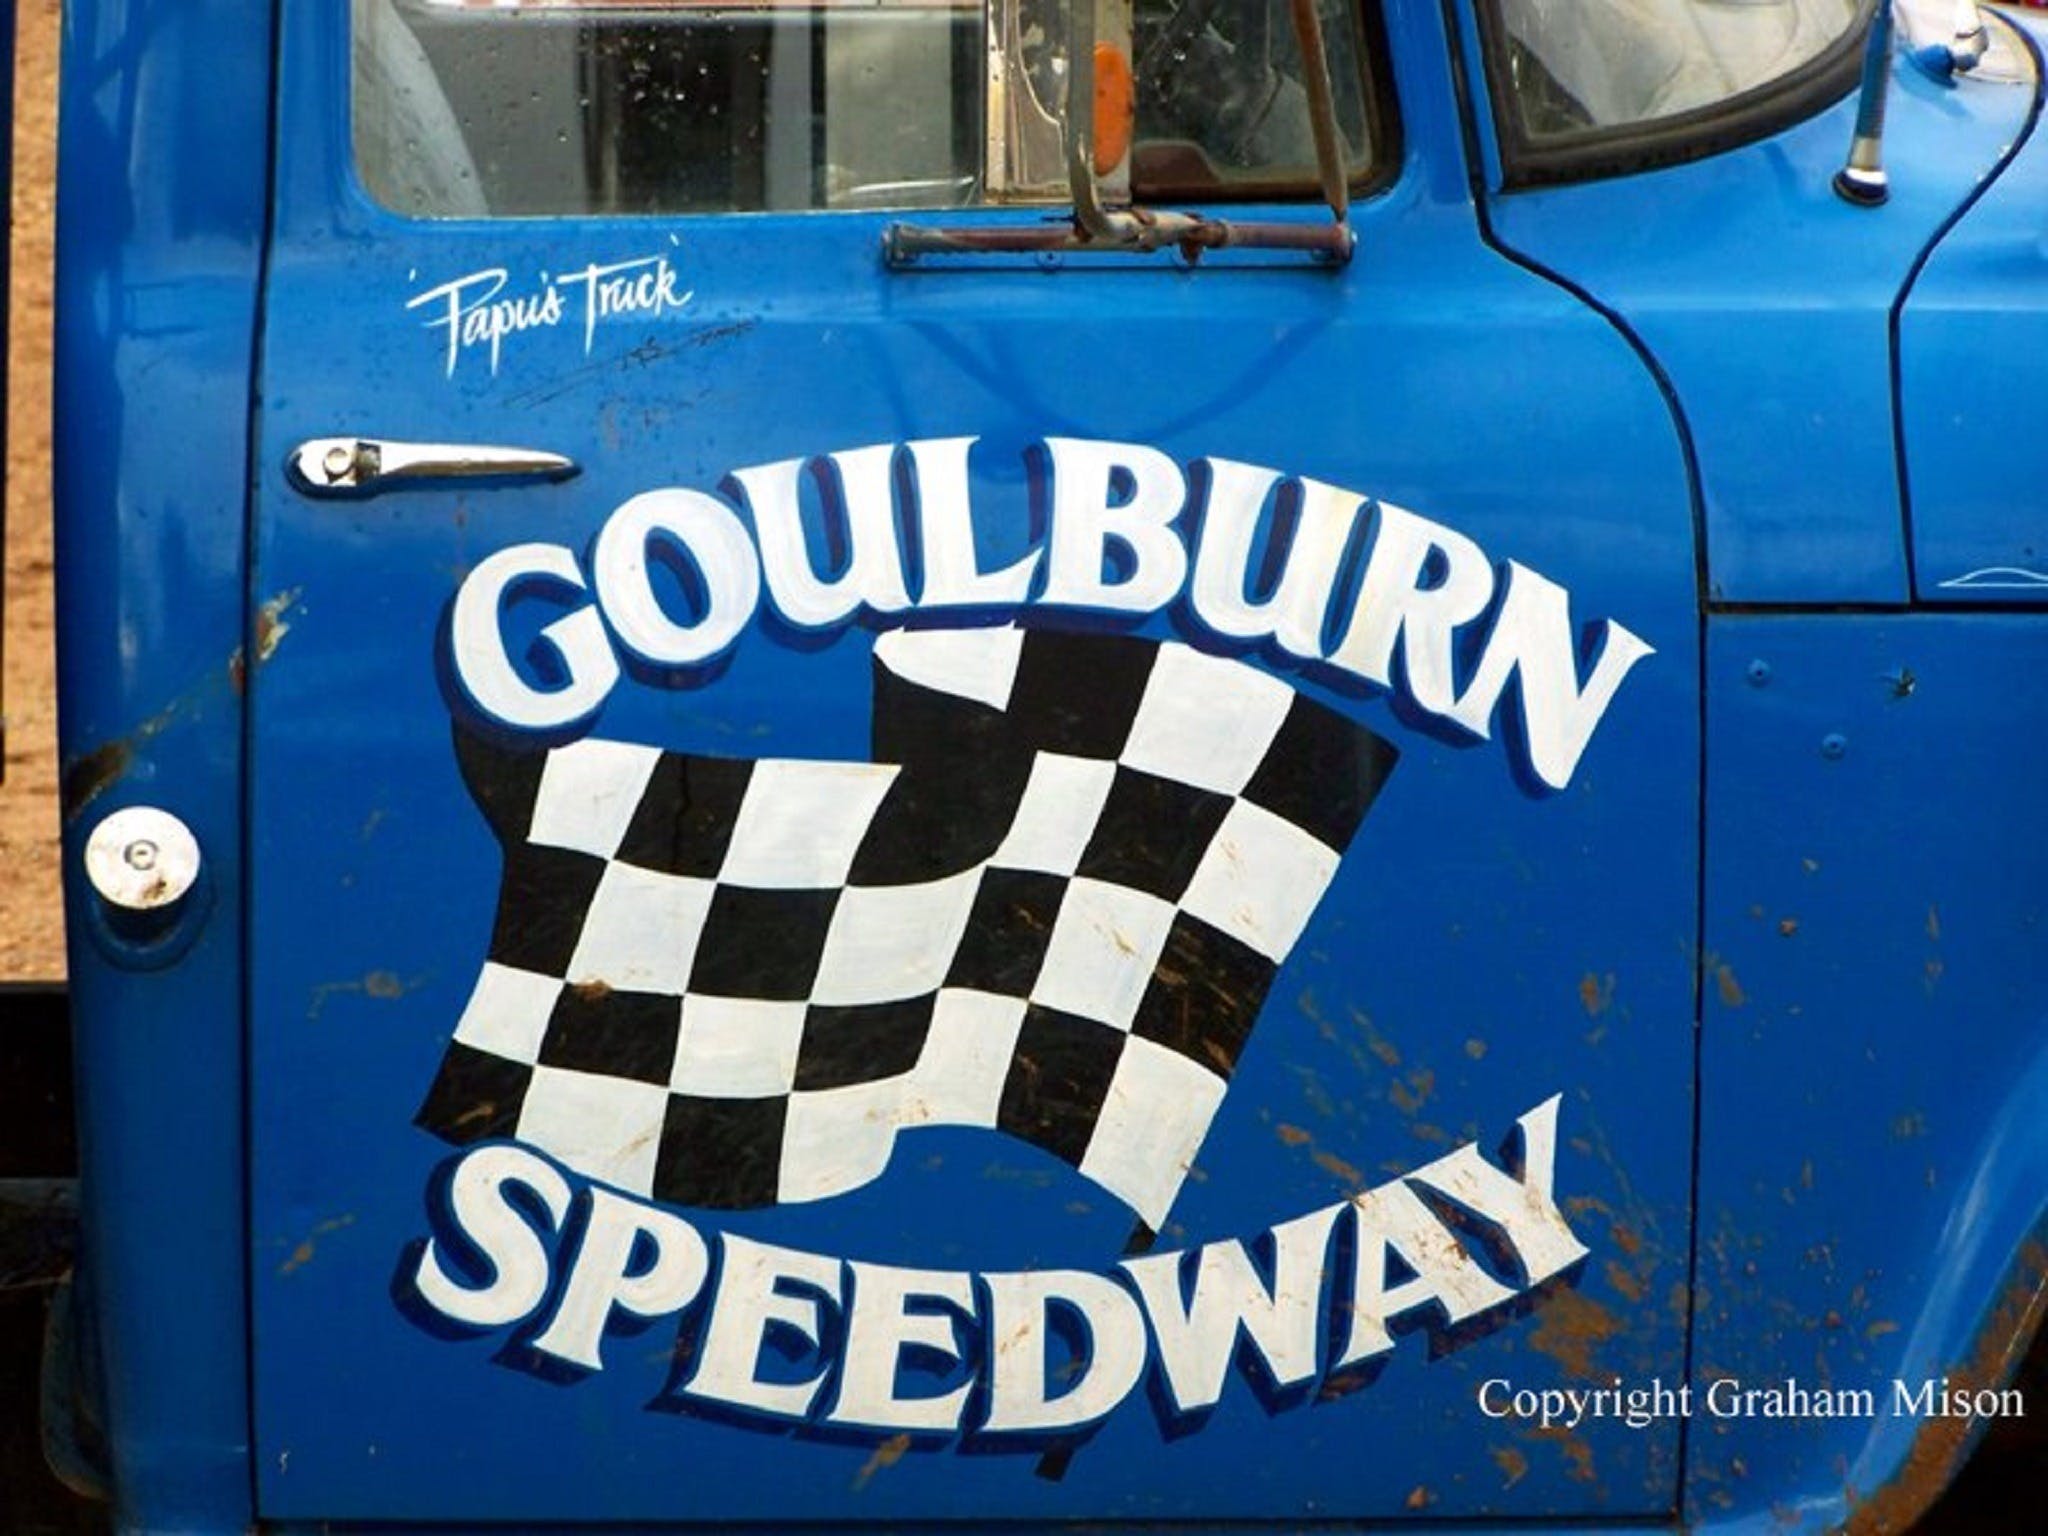 50 years of racing at Goulburn Speedway - Accommodation Main Beach